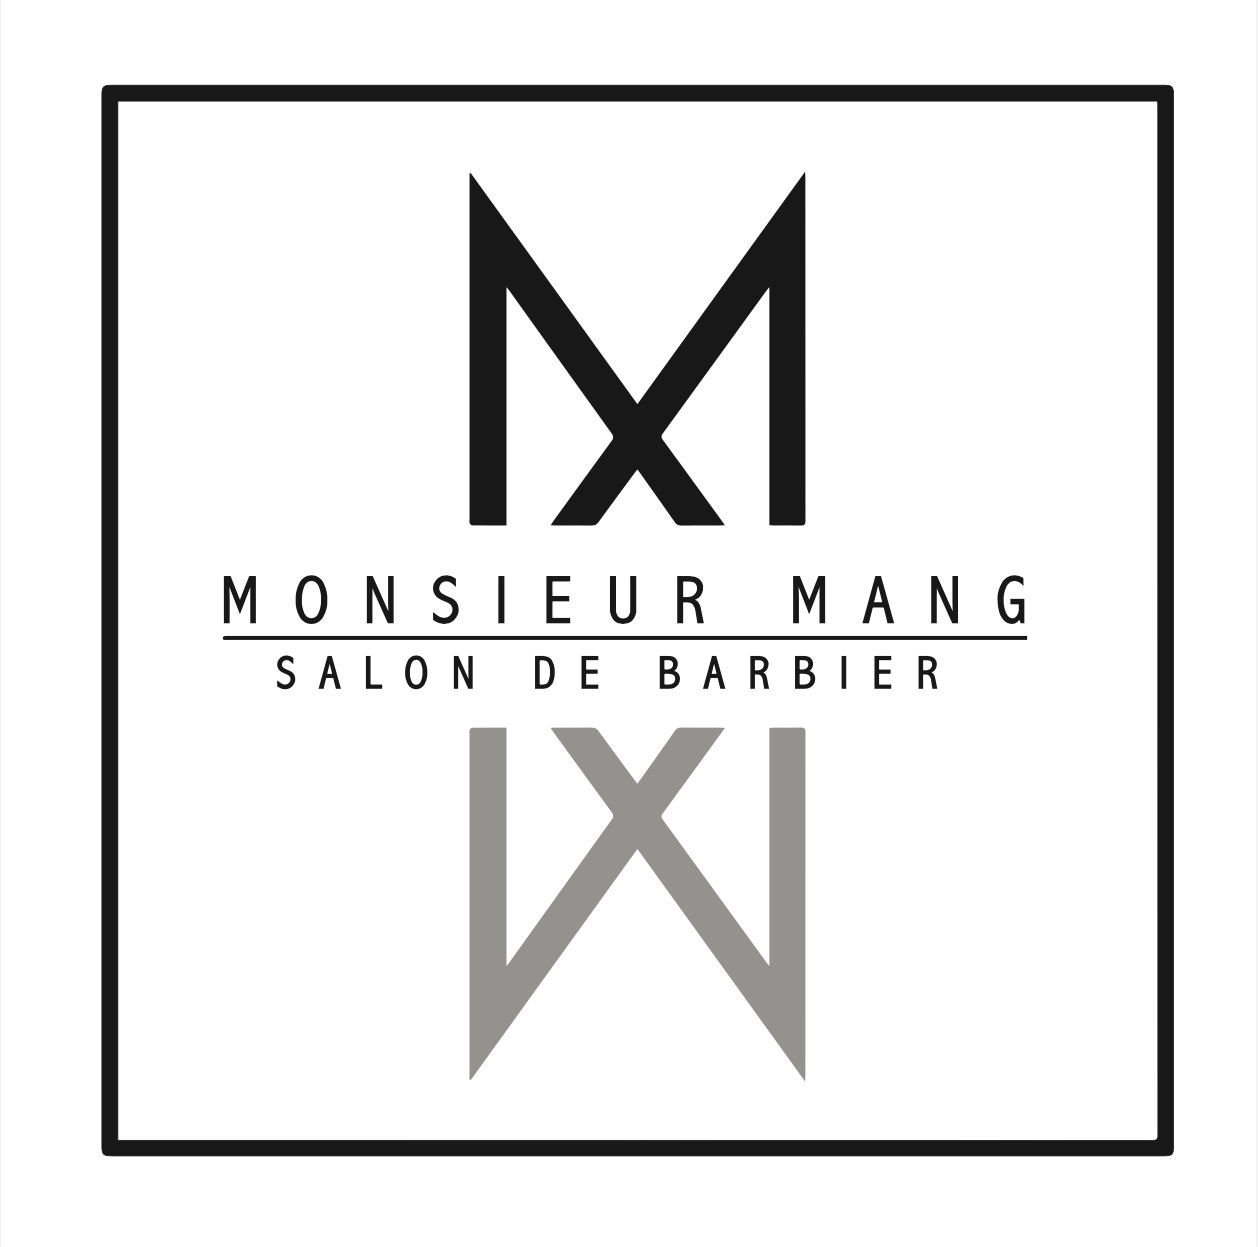 Monsieur Mang